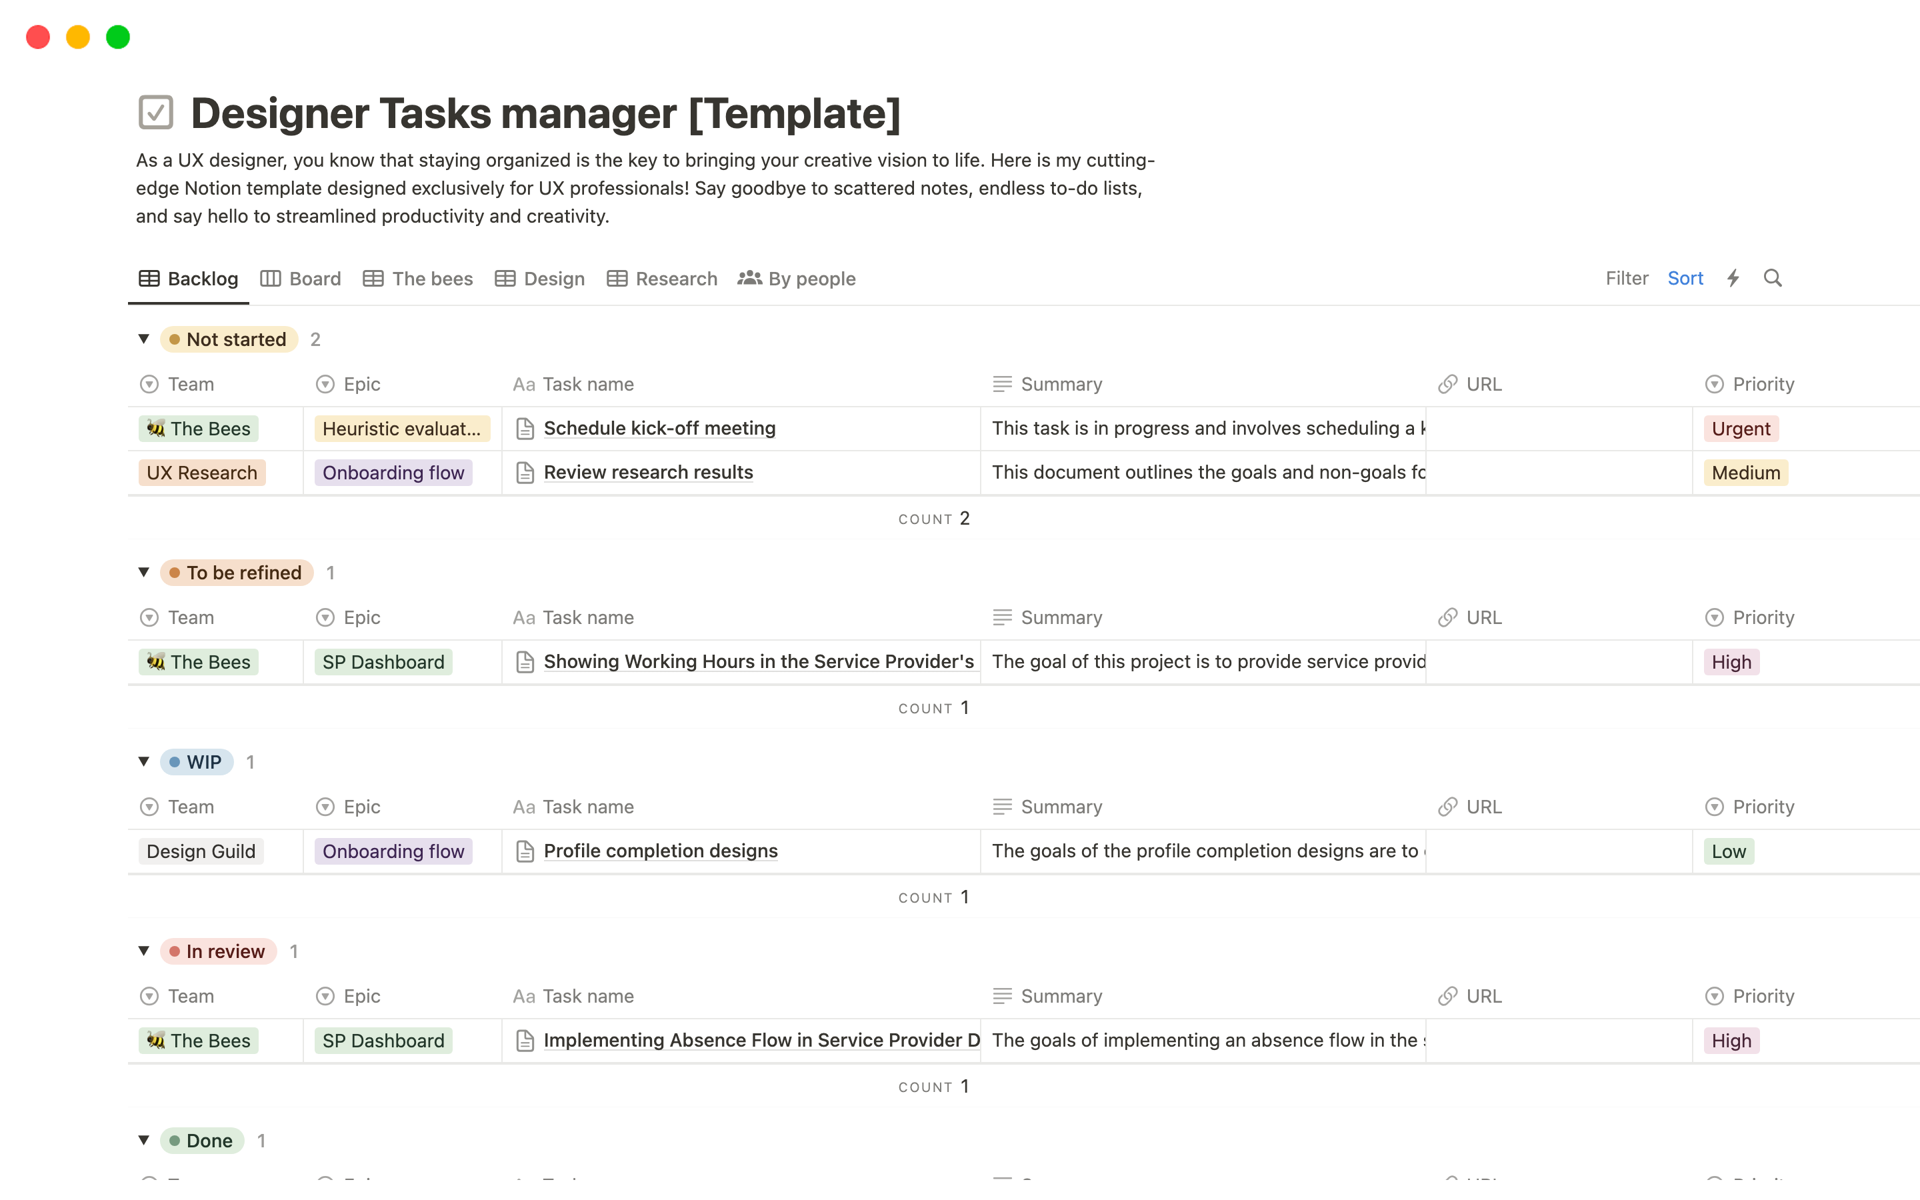 Manage your design tasks like a pro!